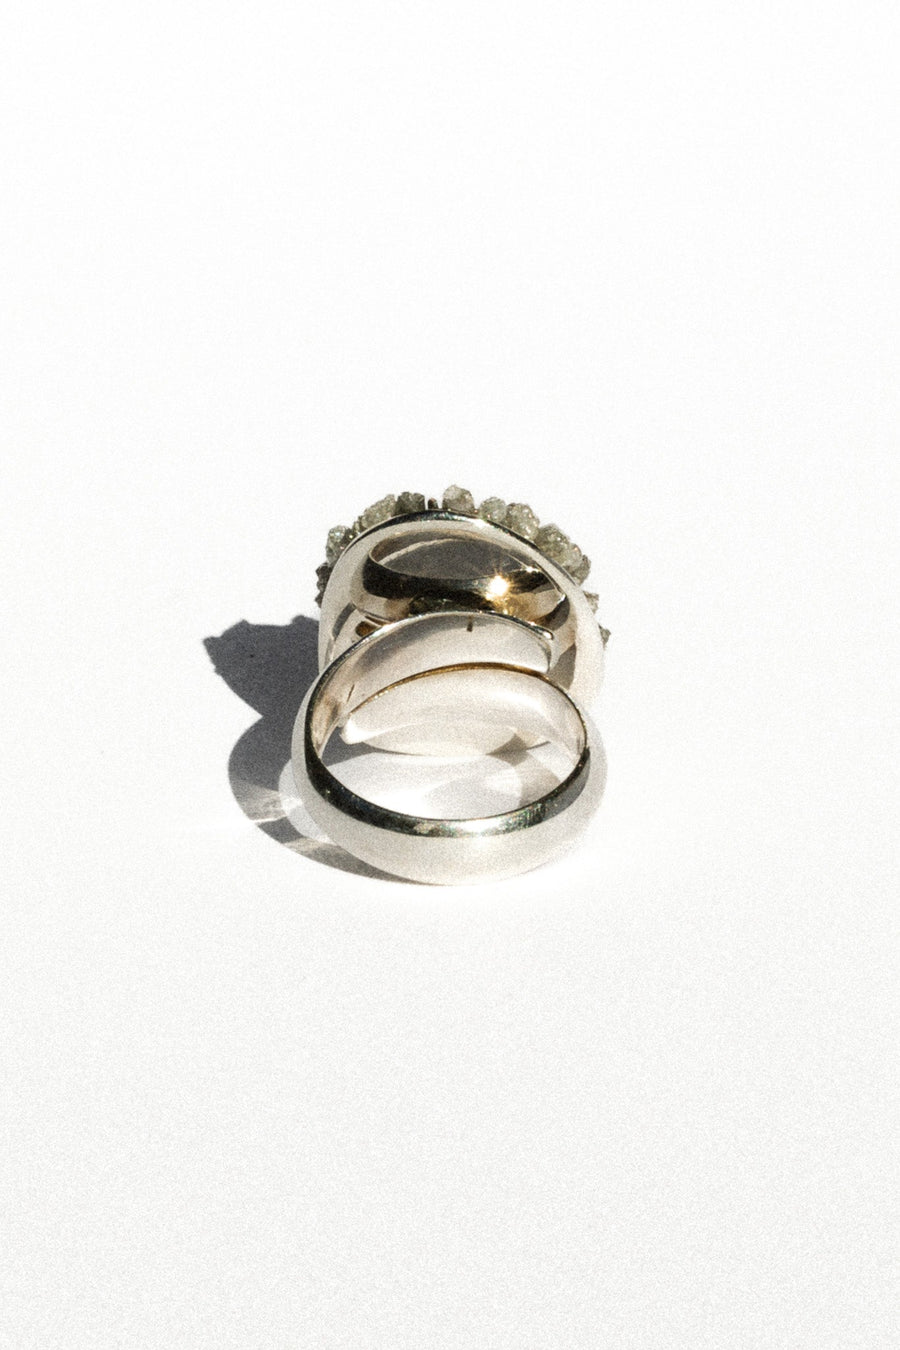 Starborn Creations Jewelry US 6.5 / Open Size / Silver Nova Rough Diamond Ring